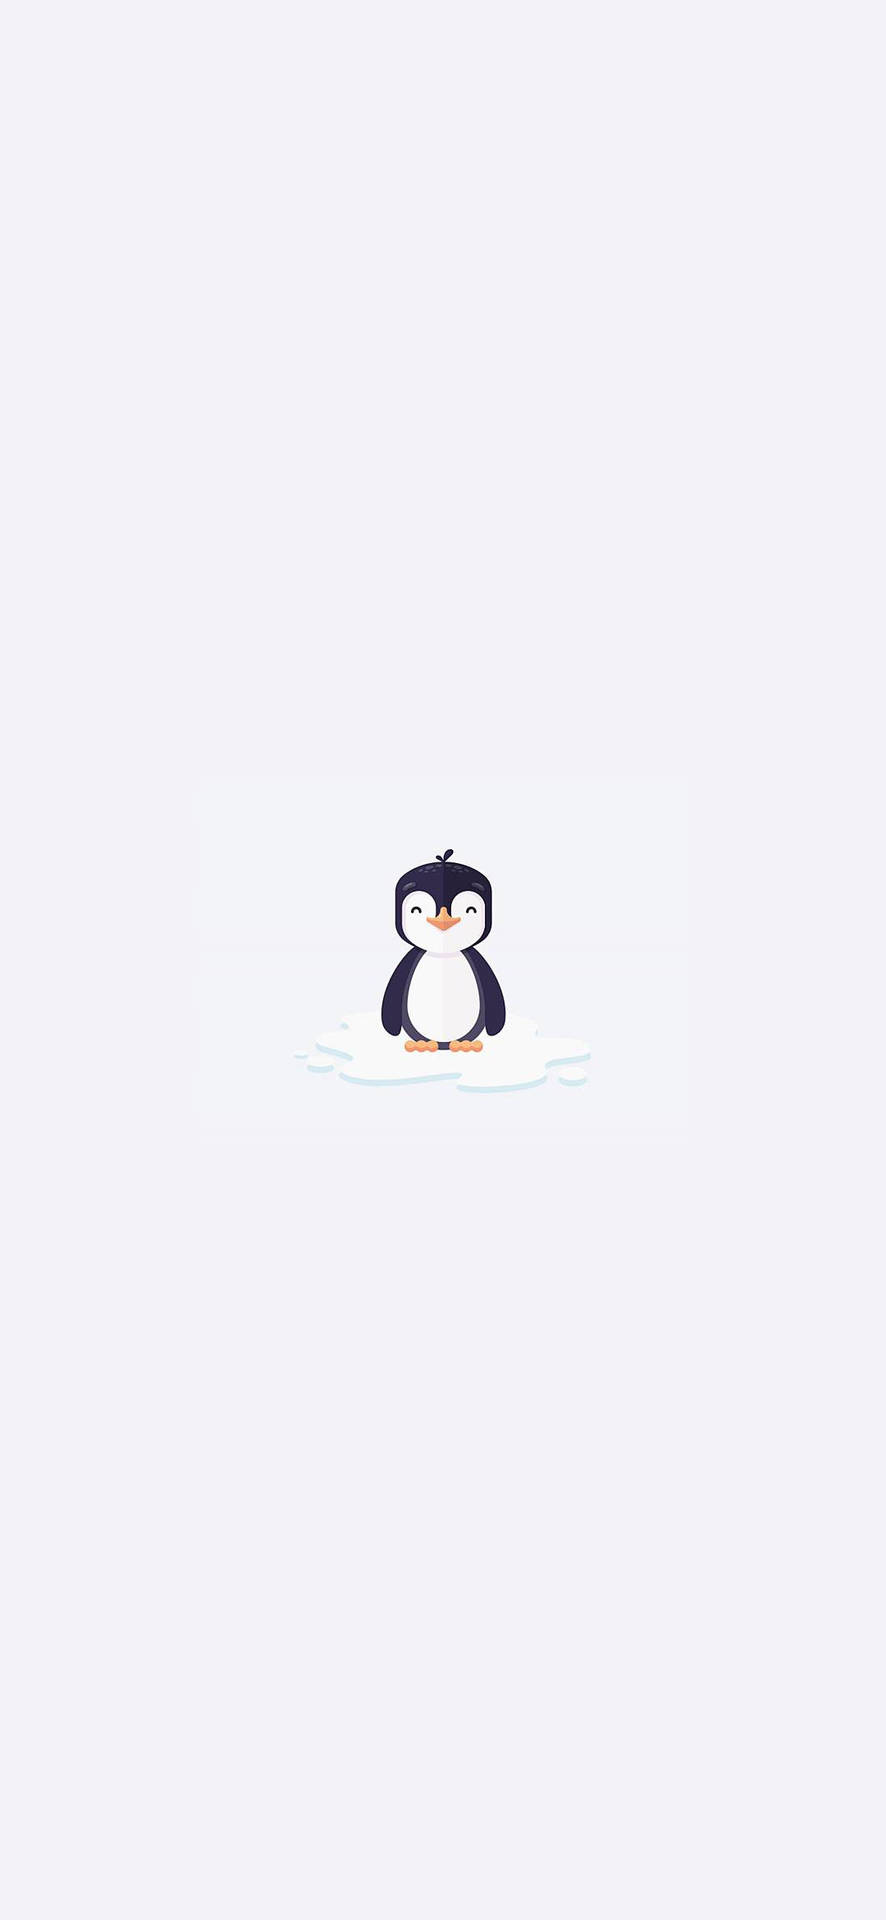 White Adorable Penguin Iphone